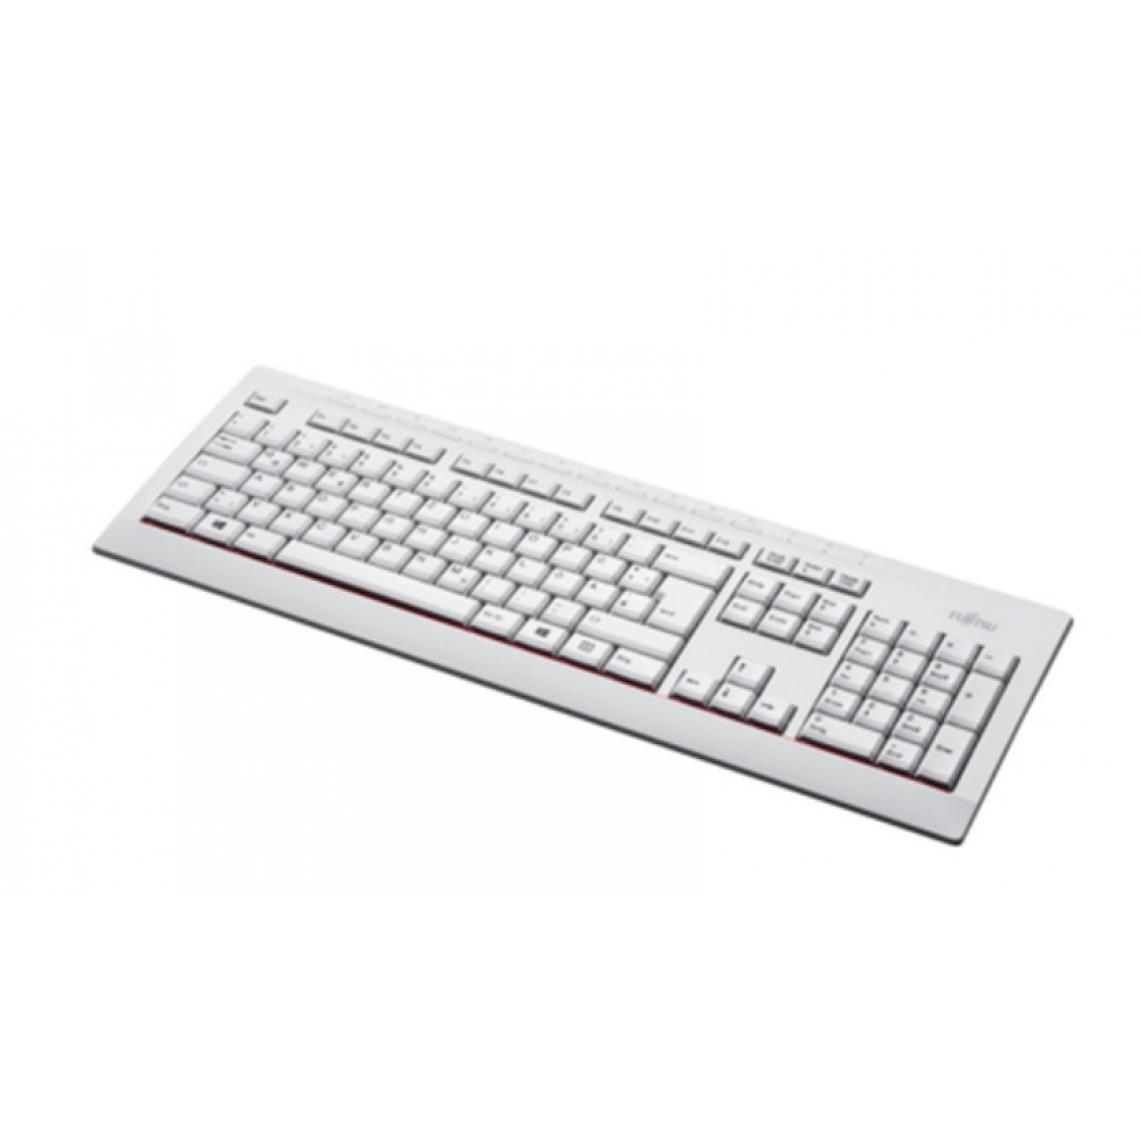 Fujitsu - Keyboard KB521 FARSI Keyboard KB521 Standard Tastatur persian and english FARSI Layout marble grey 1.8m - Clavier